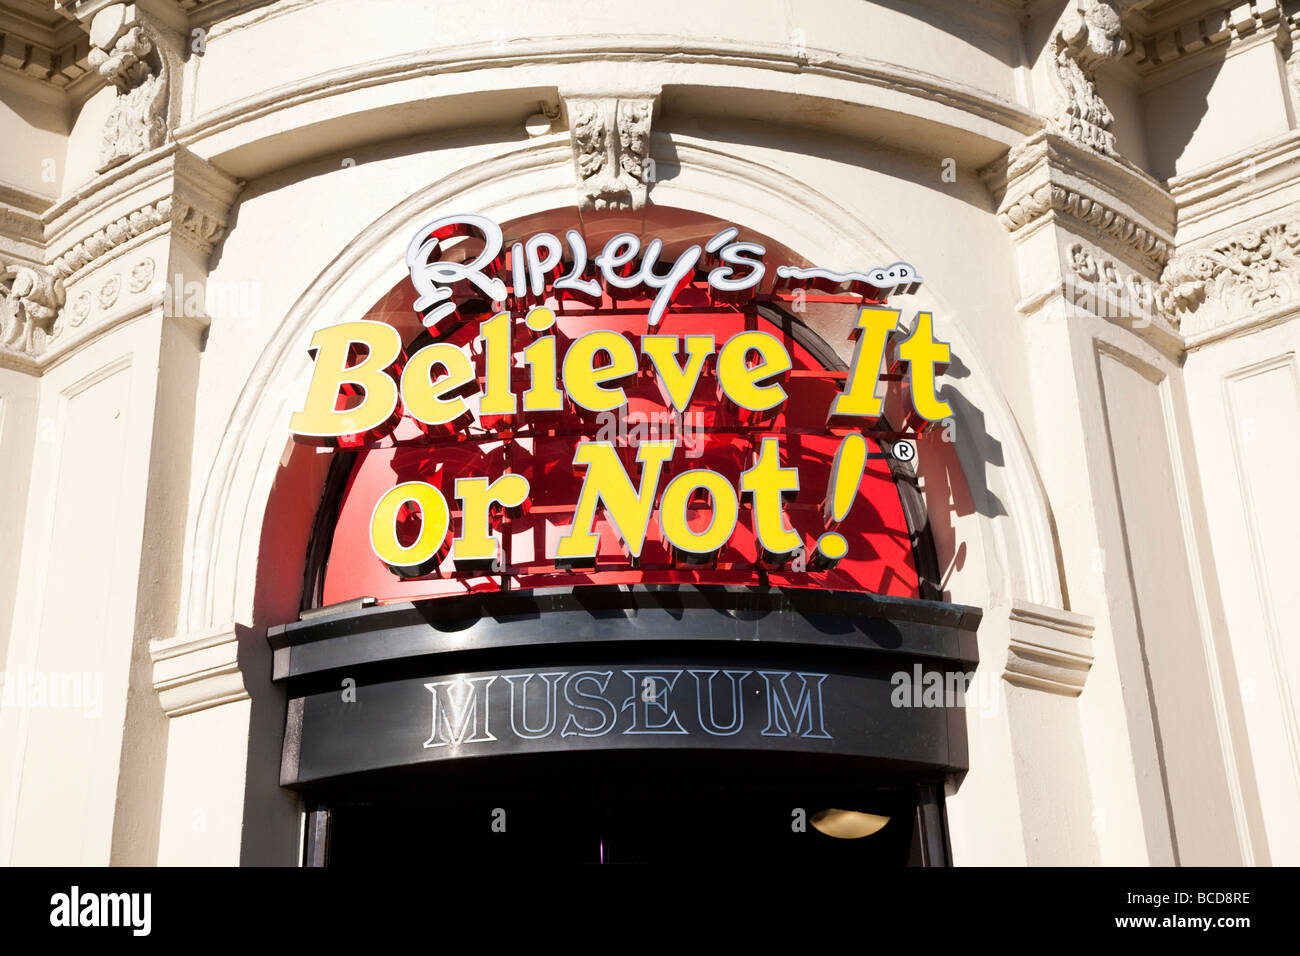 Ripley's Believe it or not museum london Stock Photo